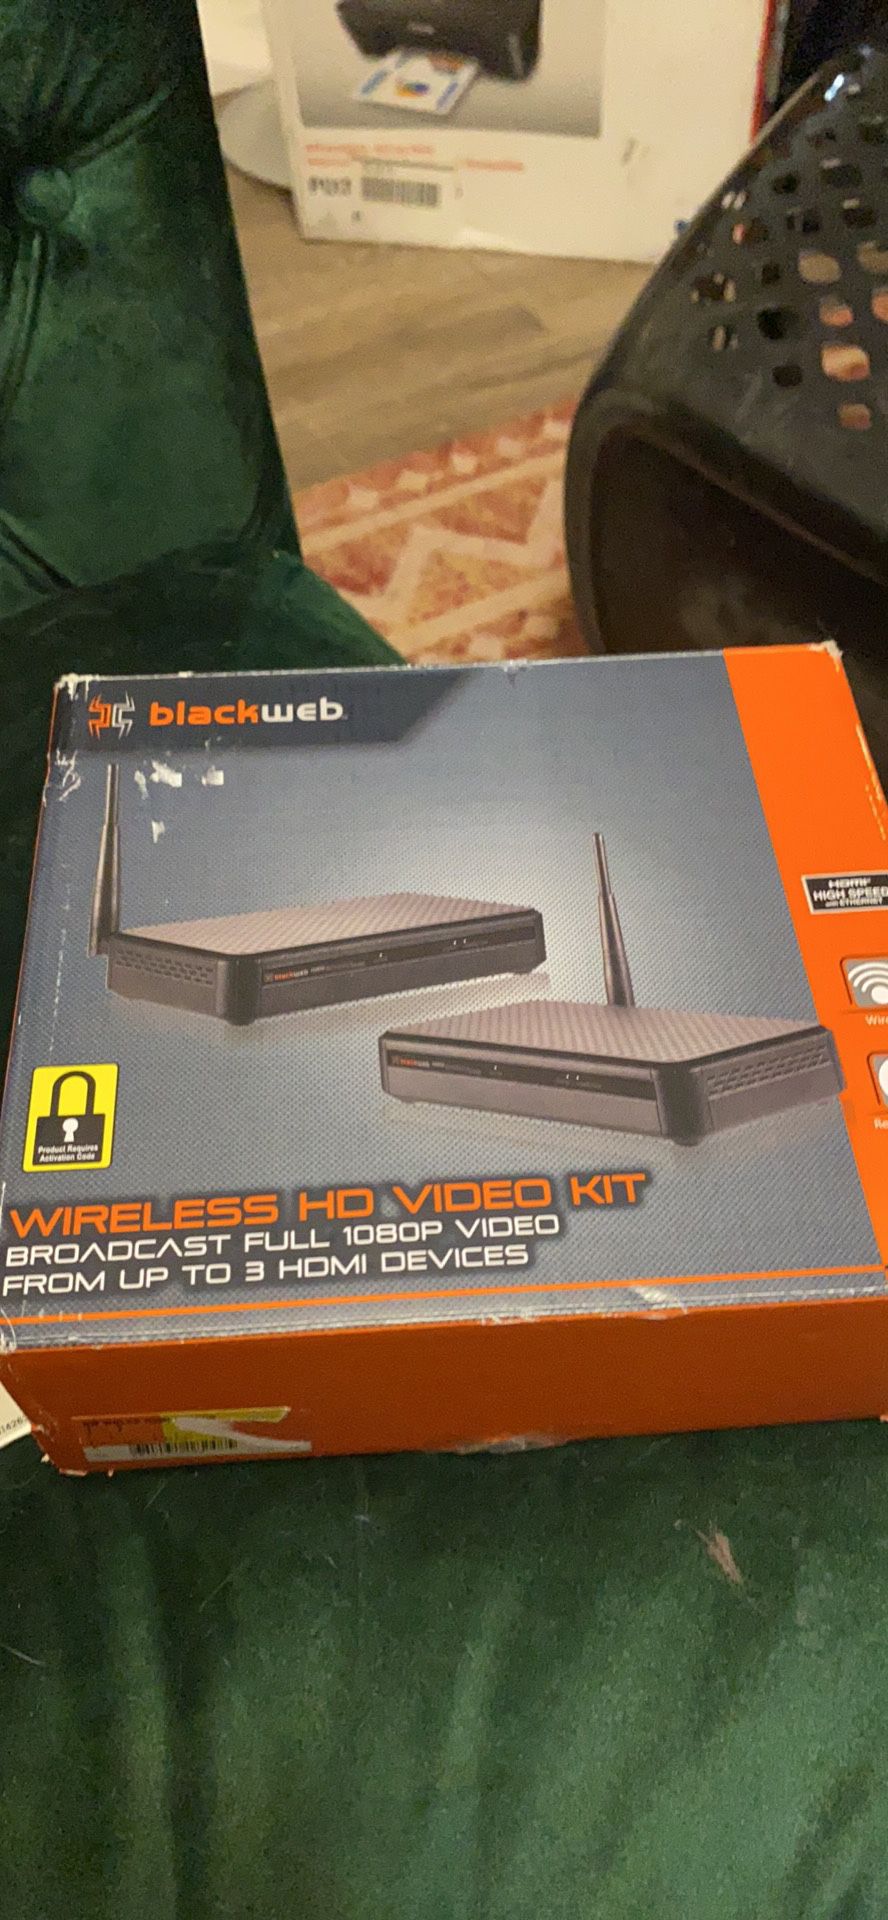 Black web hd video kit